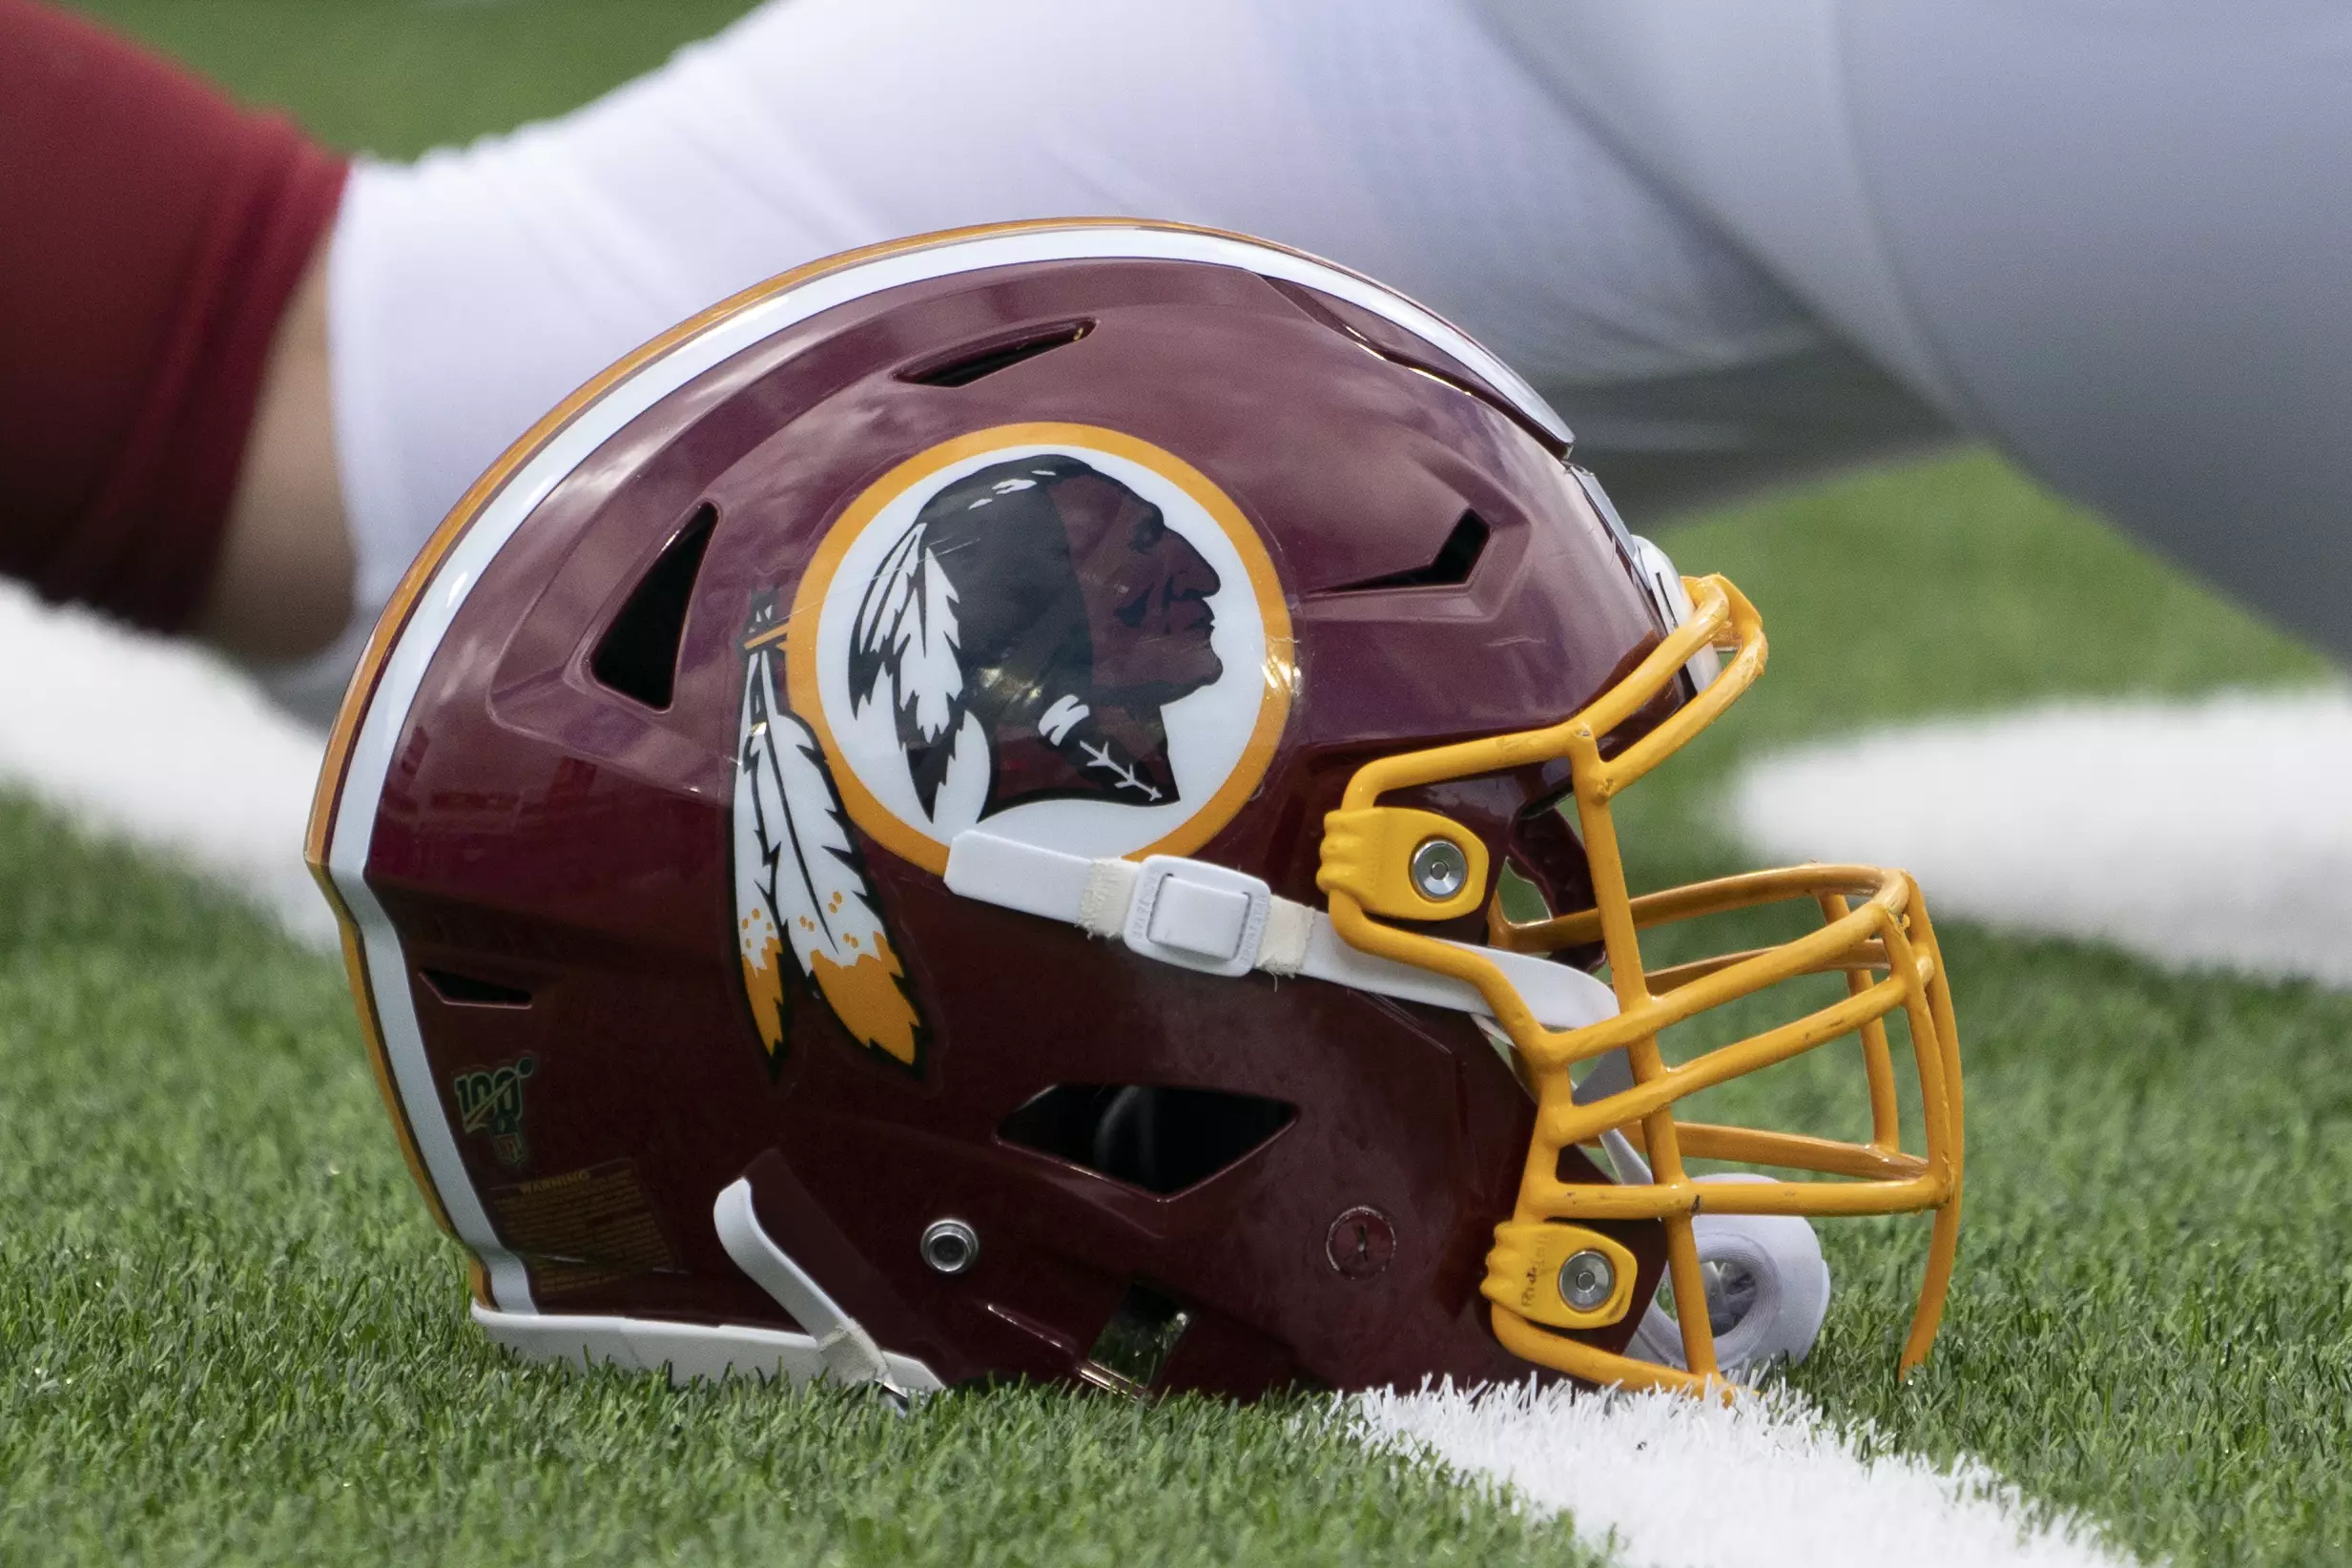 The Washington Redskins' helmet.